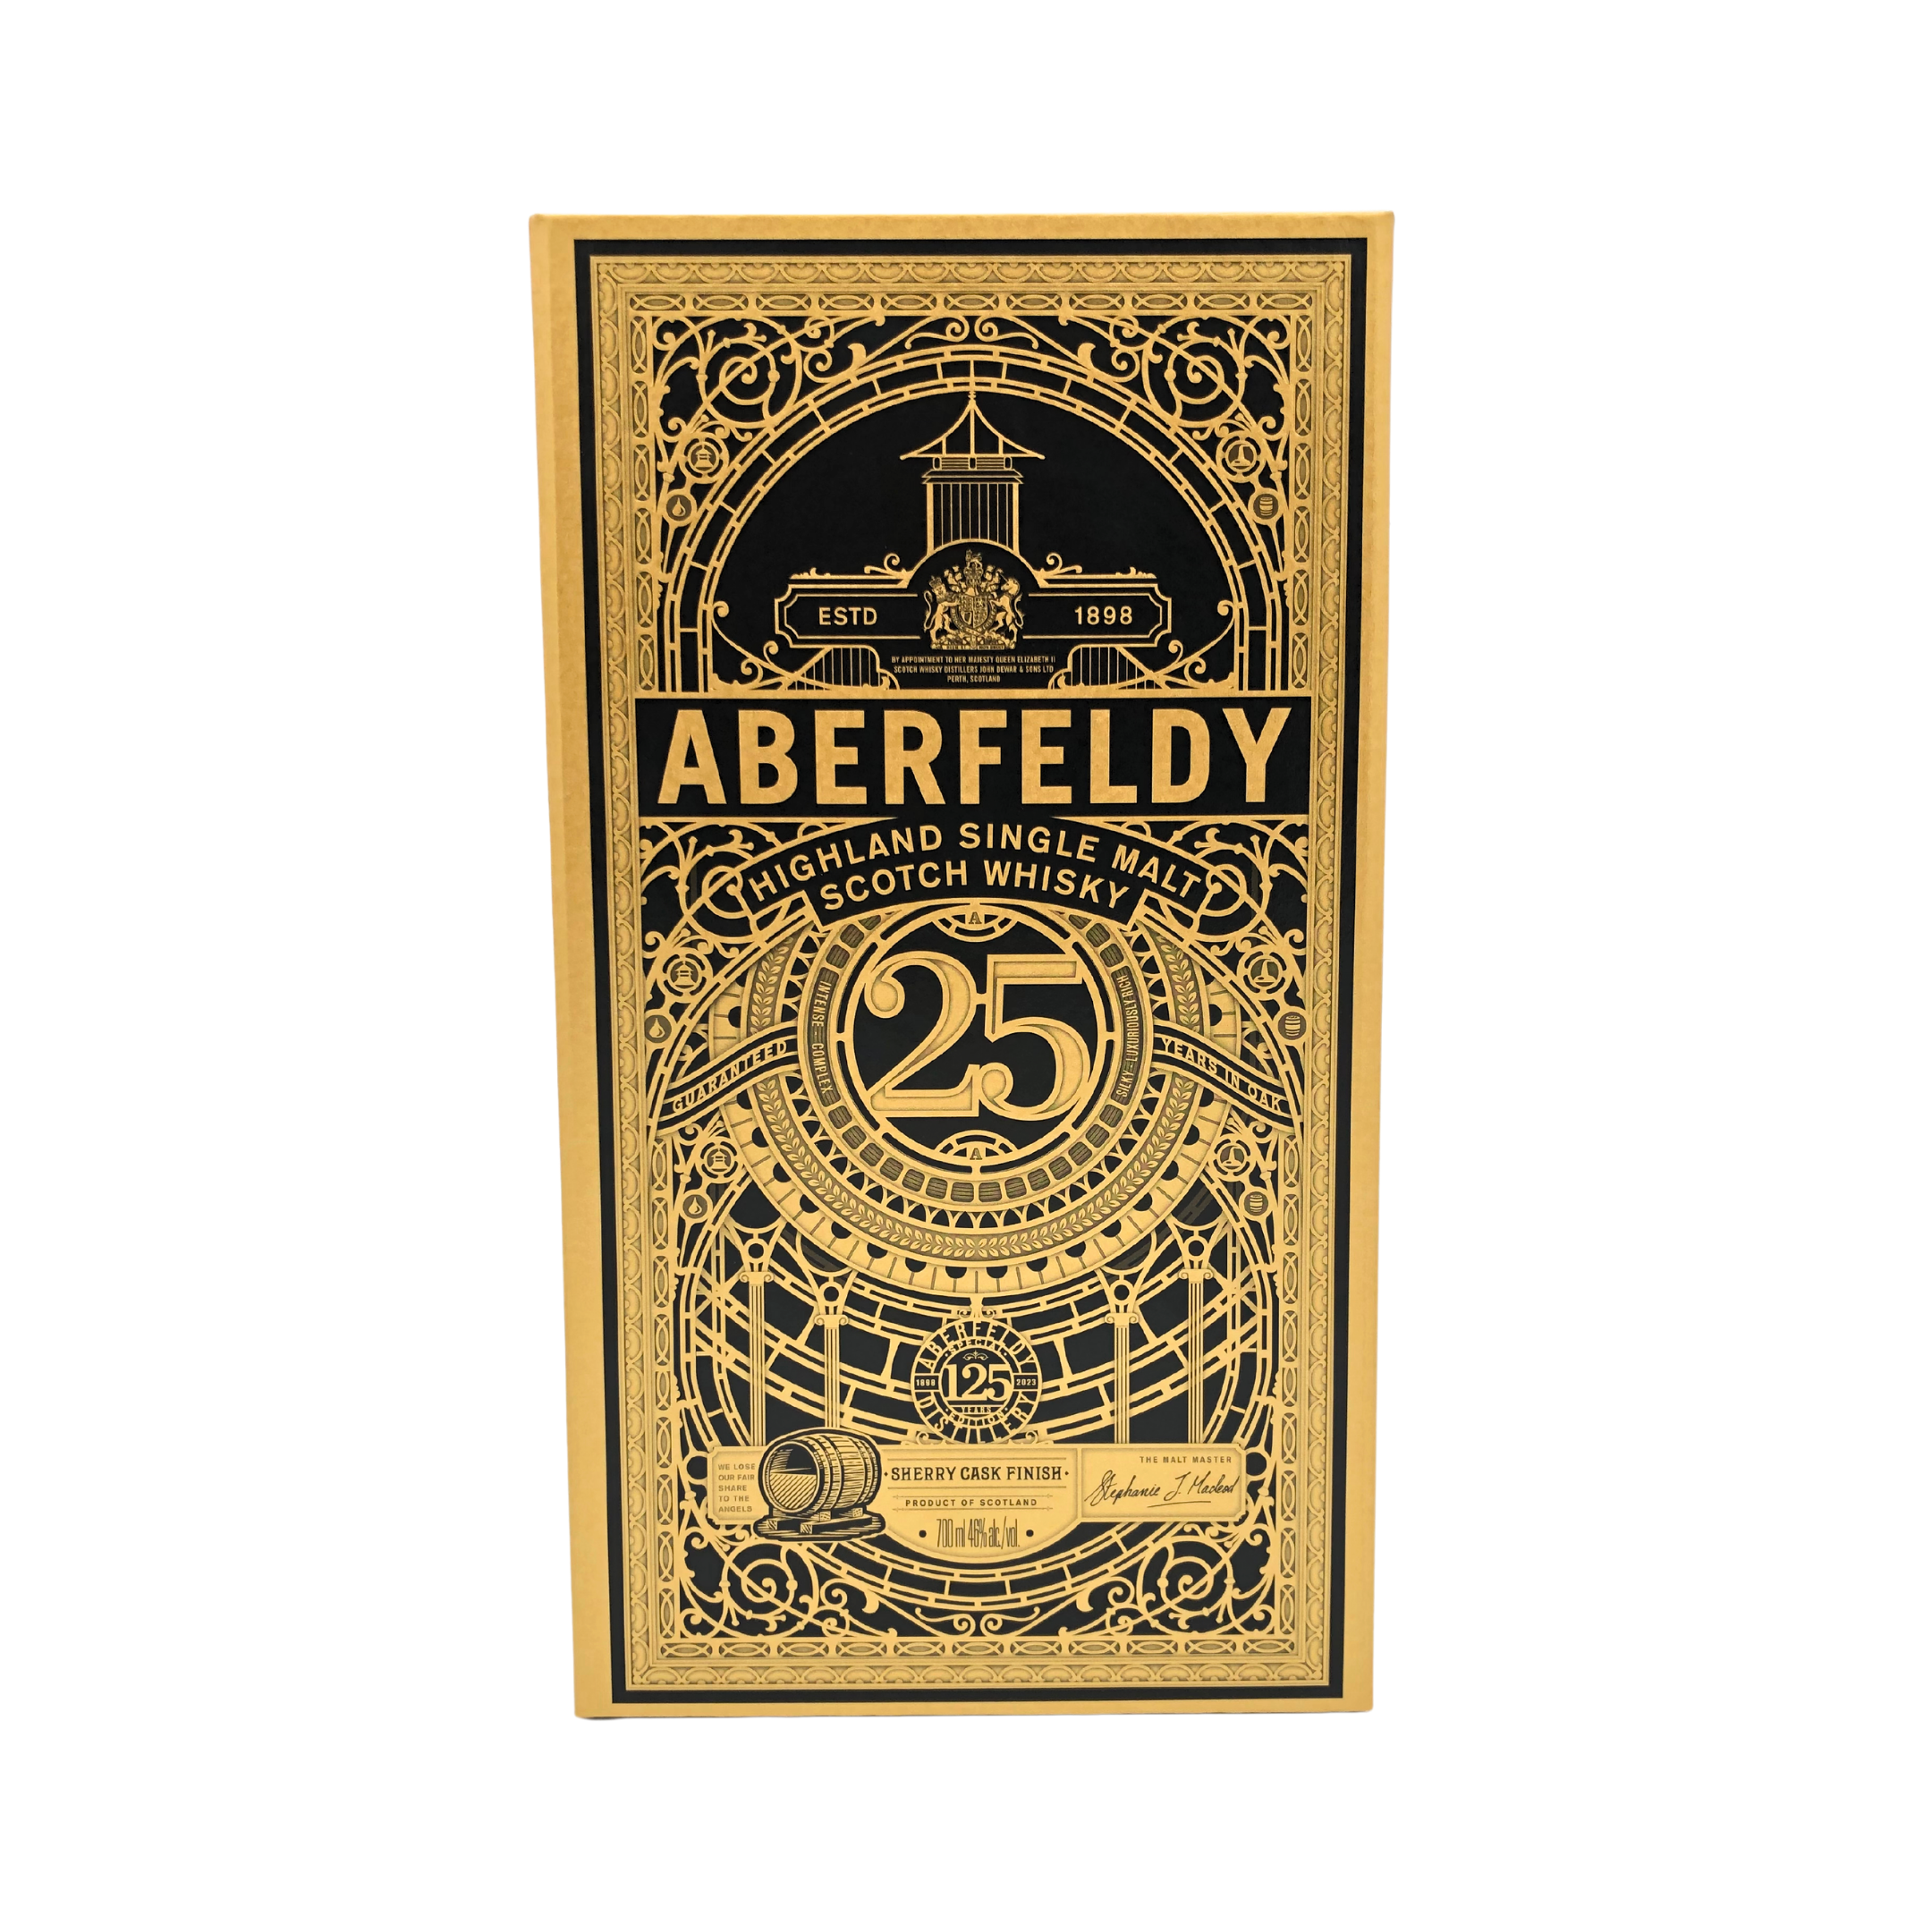 ABERFELDY - 25 yo Highland Single Malt Scotch Whisky